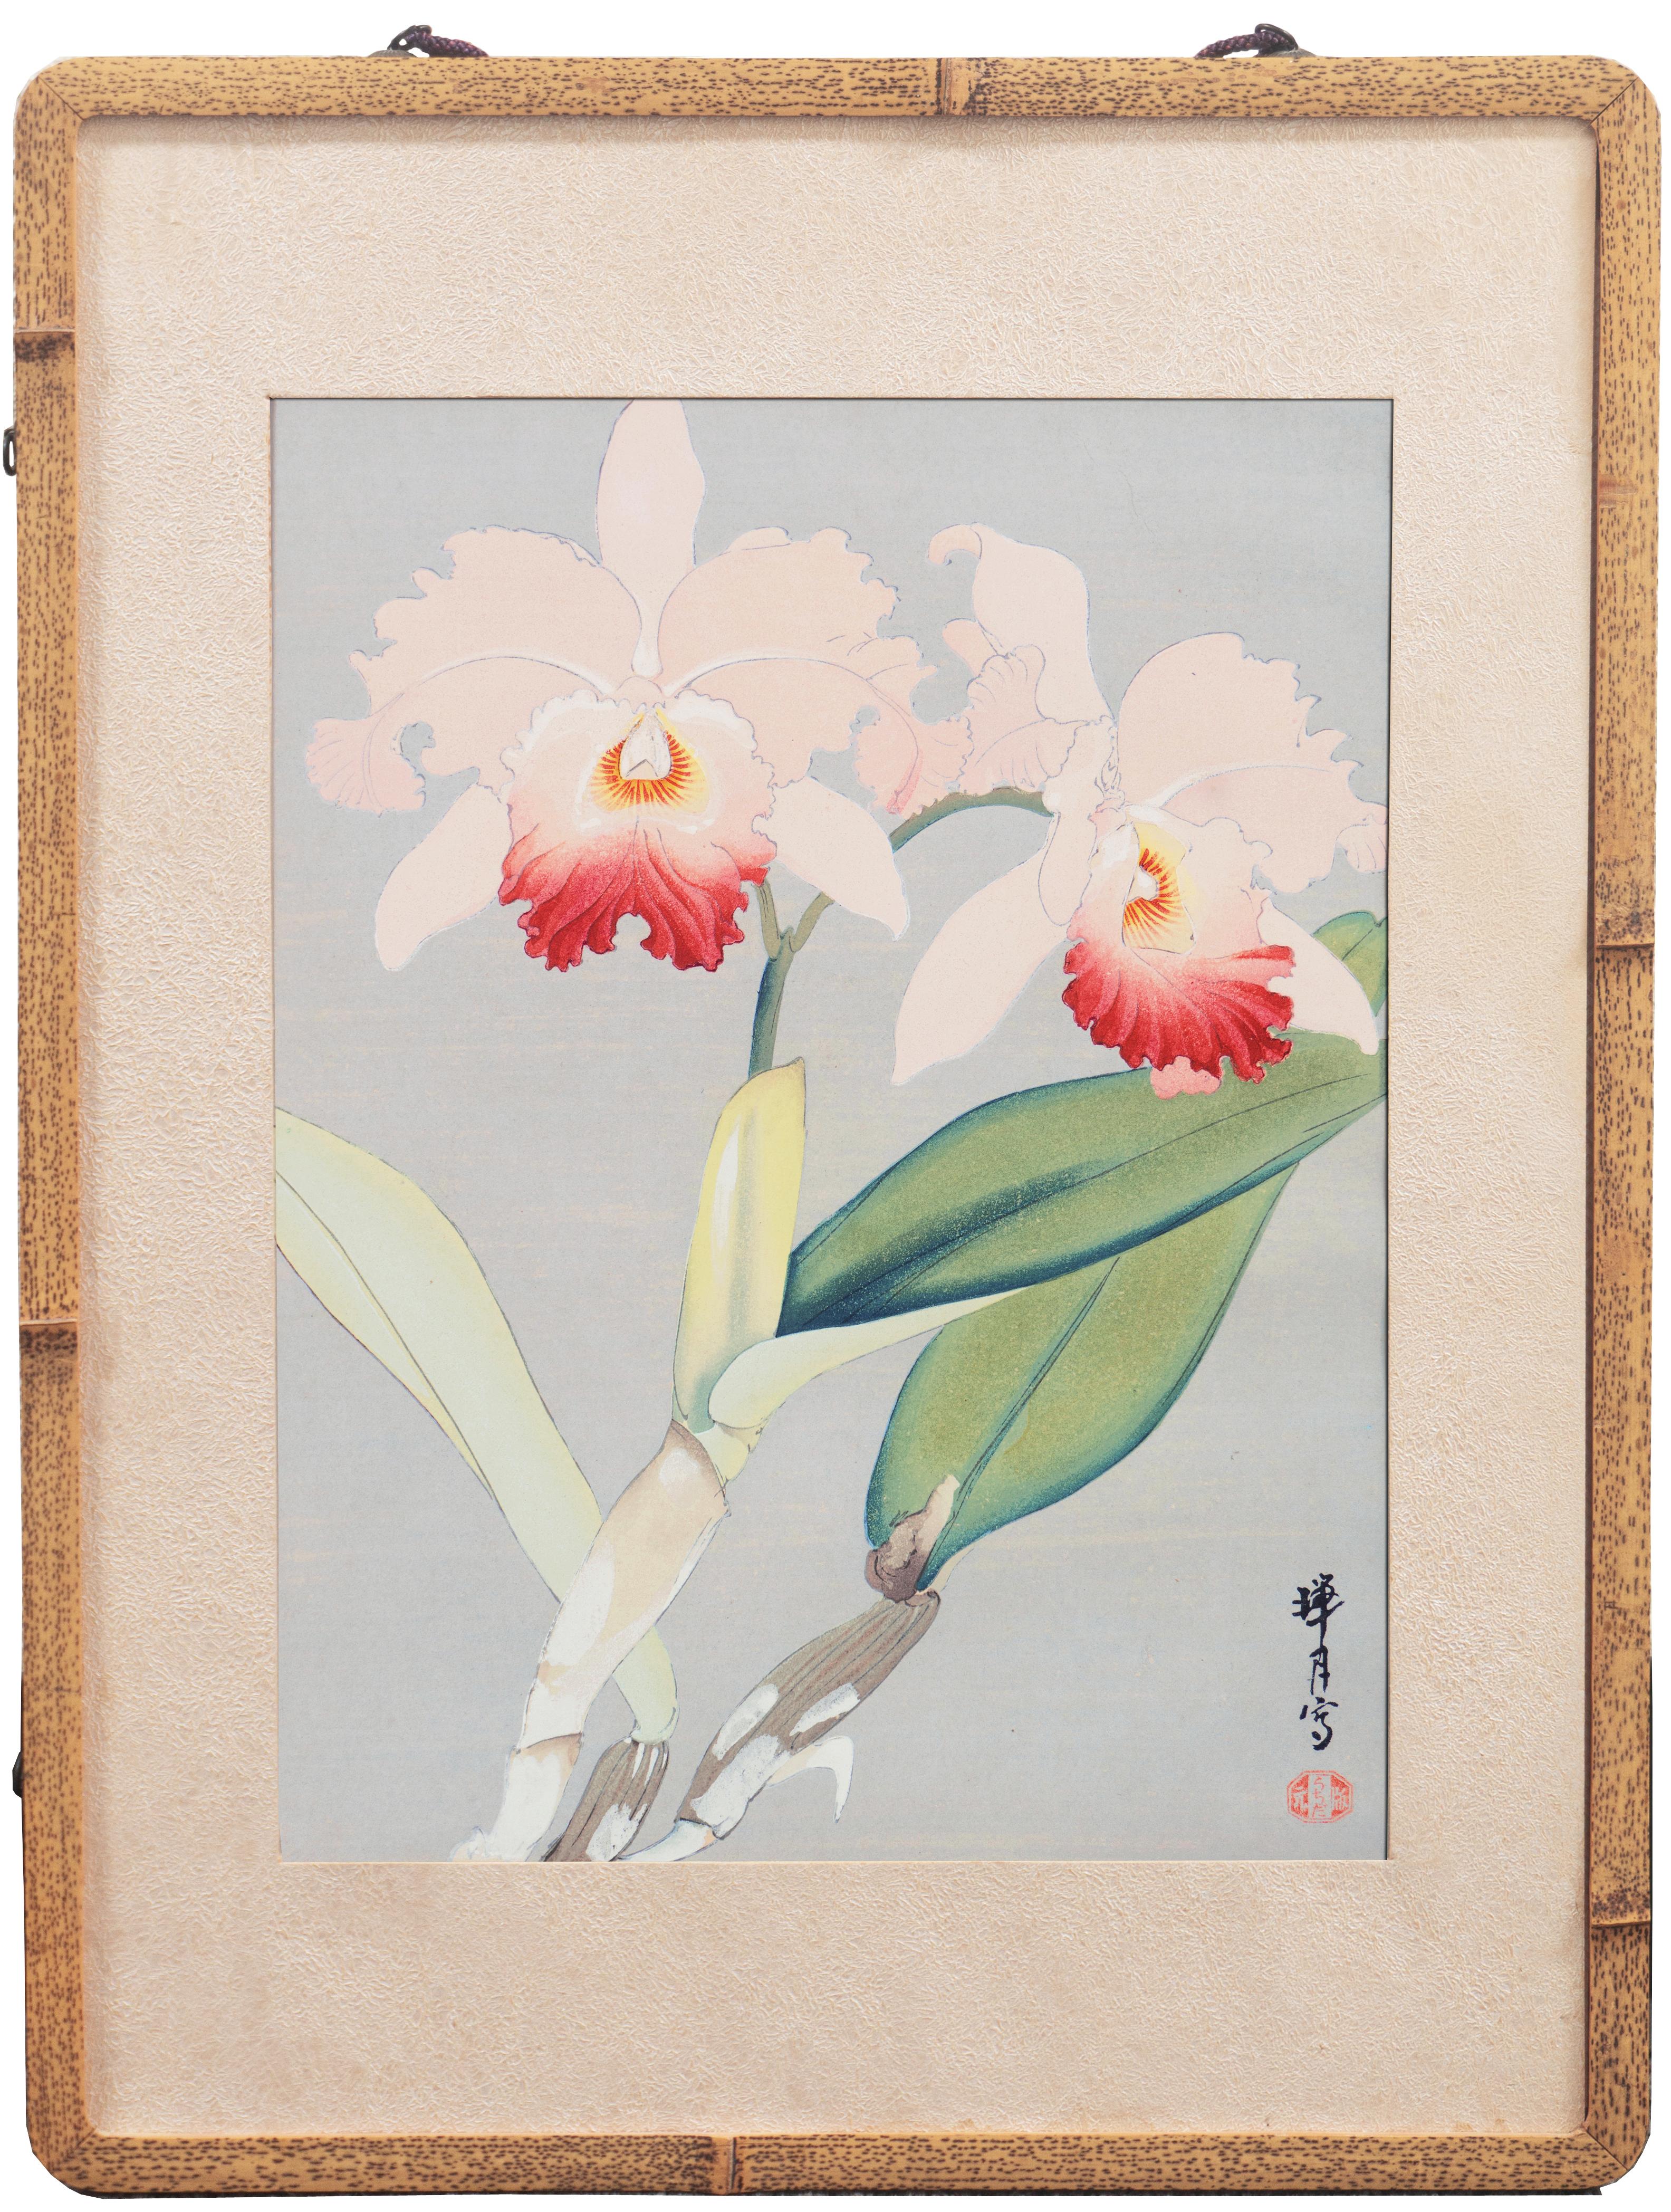 Ikeda Zuigetsu Still-Life Print - 'Still Life of Orchids', Japanese Florilegium, color woodcut, Michigan, Kyoto